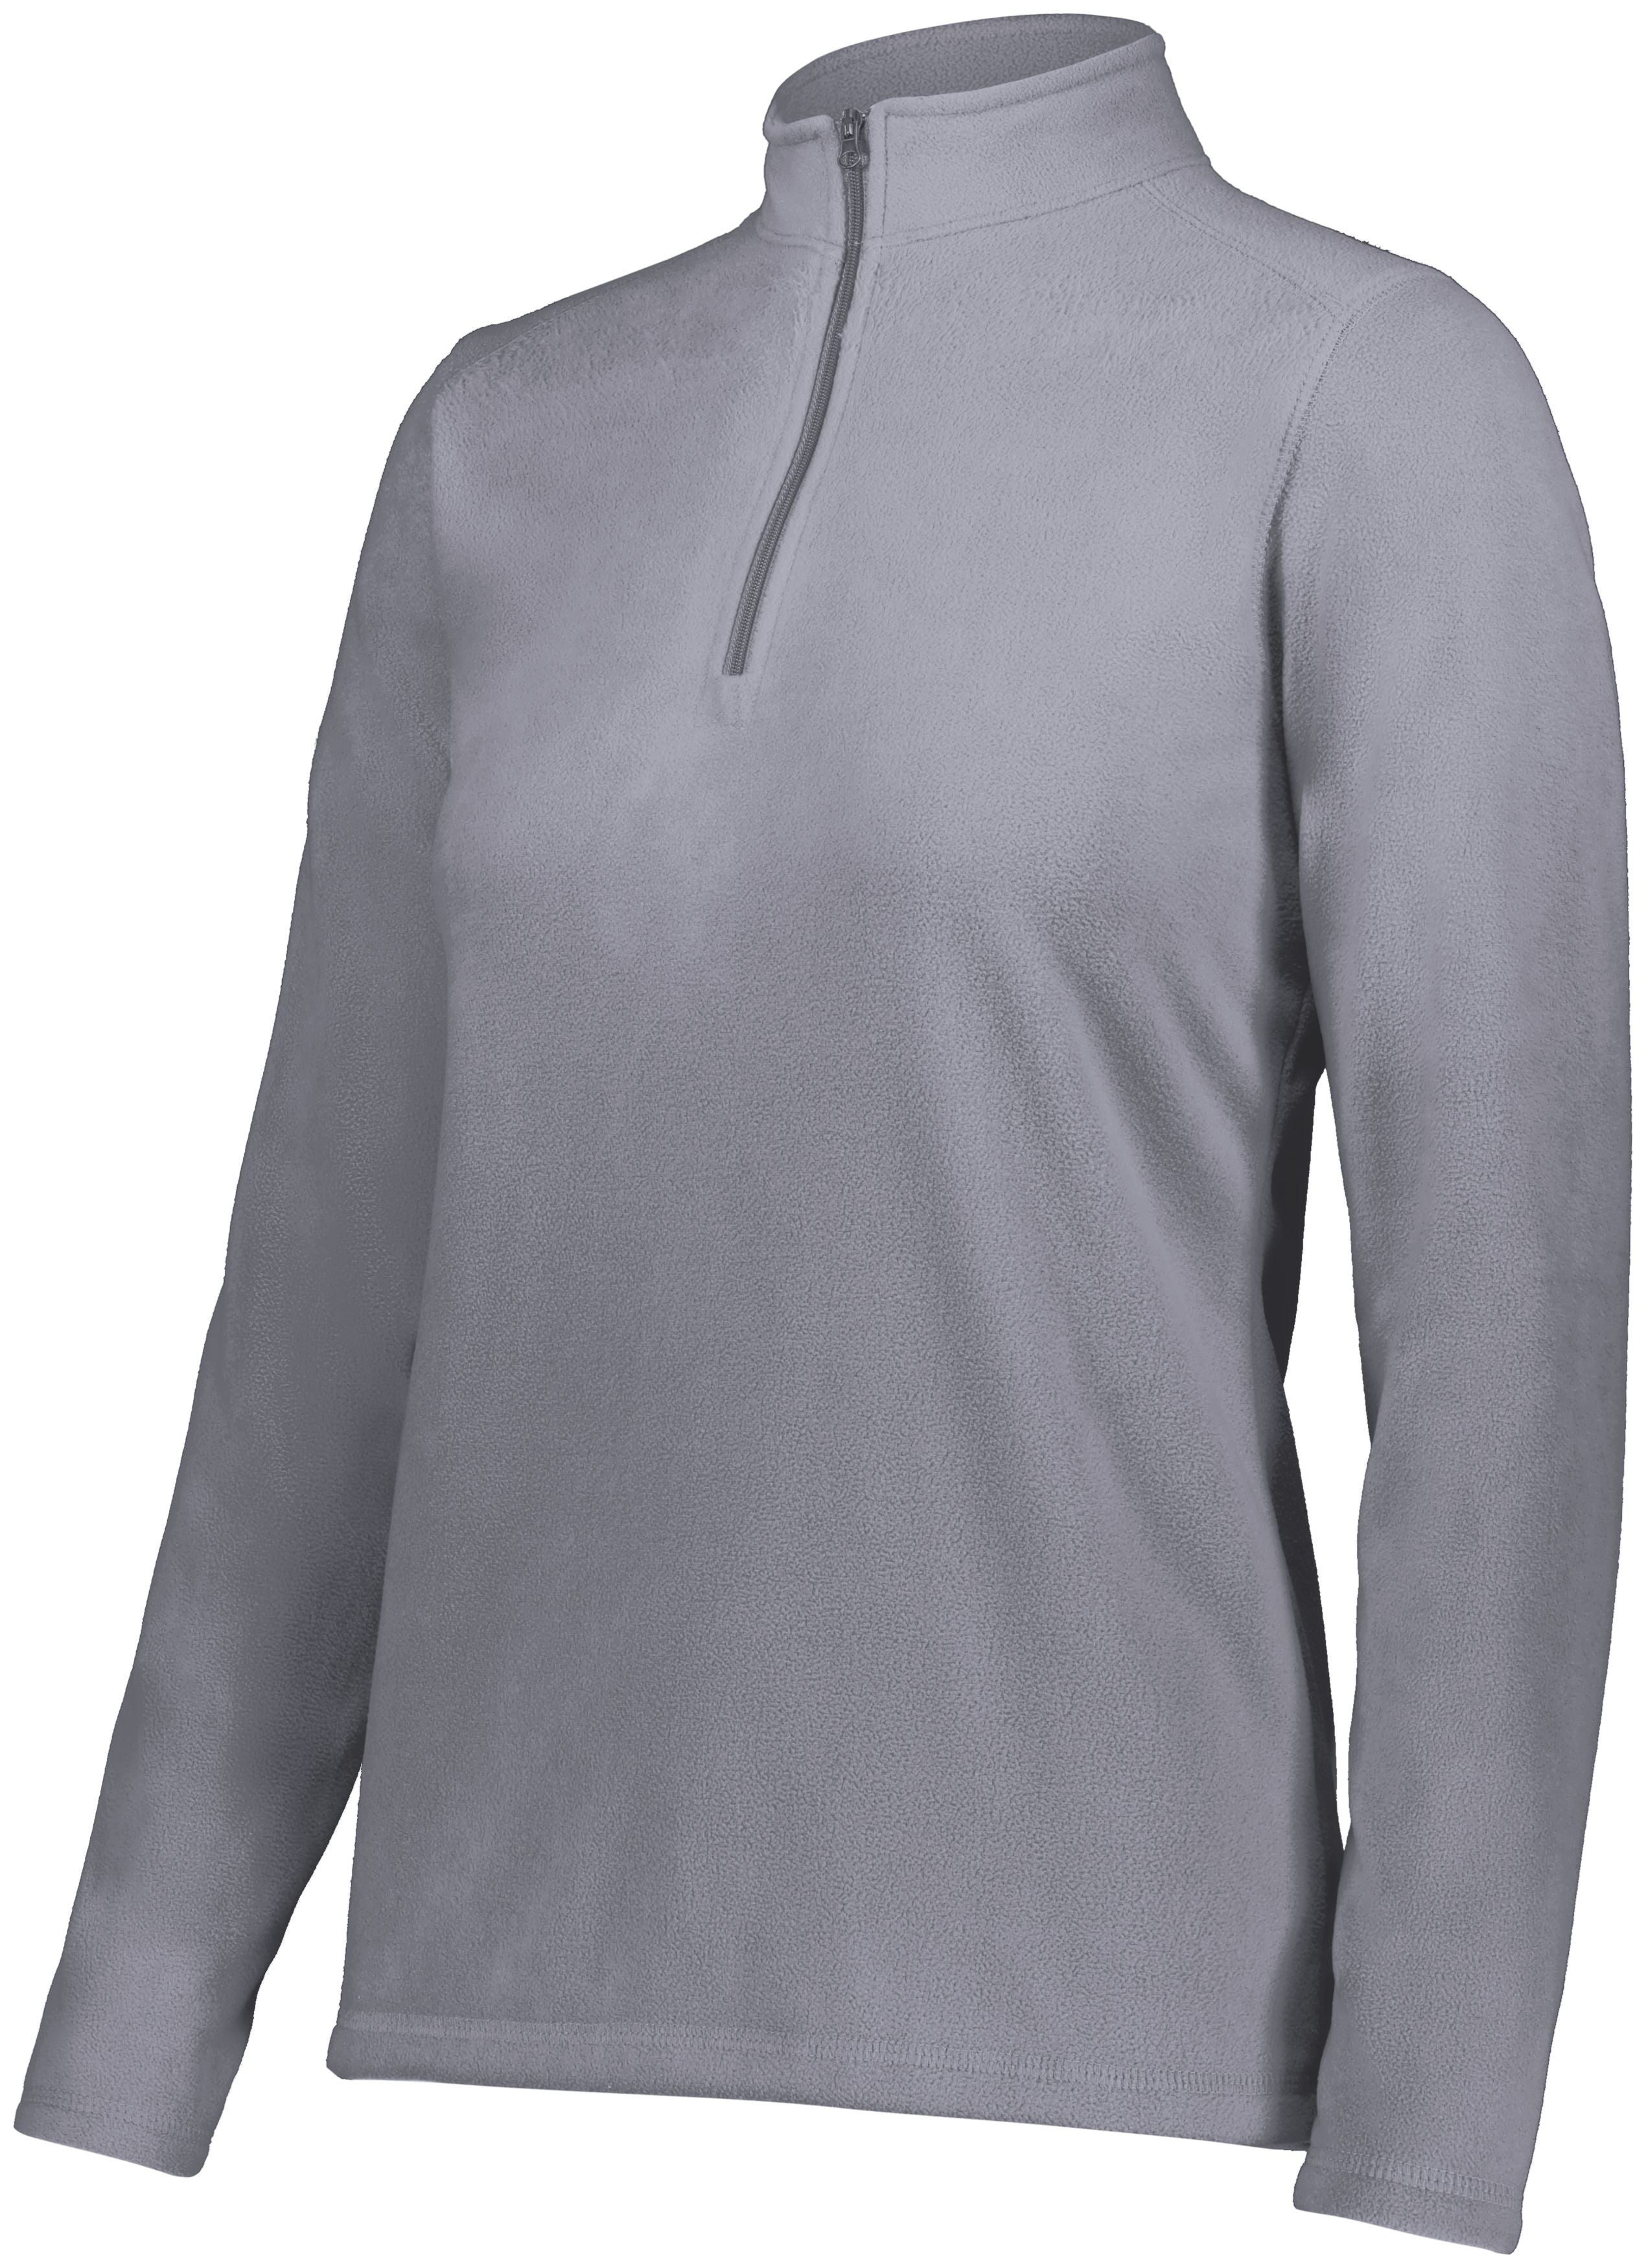 I2) 6864 Augusta Ladies Micro-Lite Fleece 1/4 Zip Pullover - OILQUICK